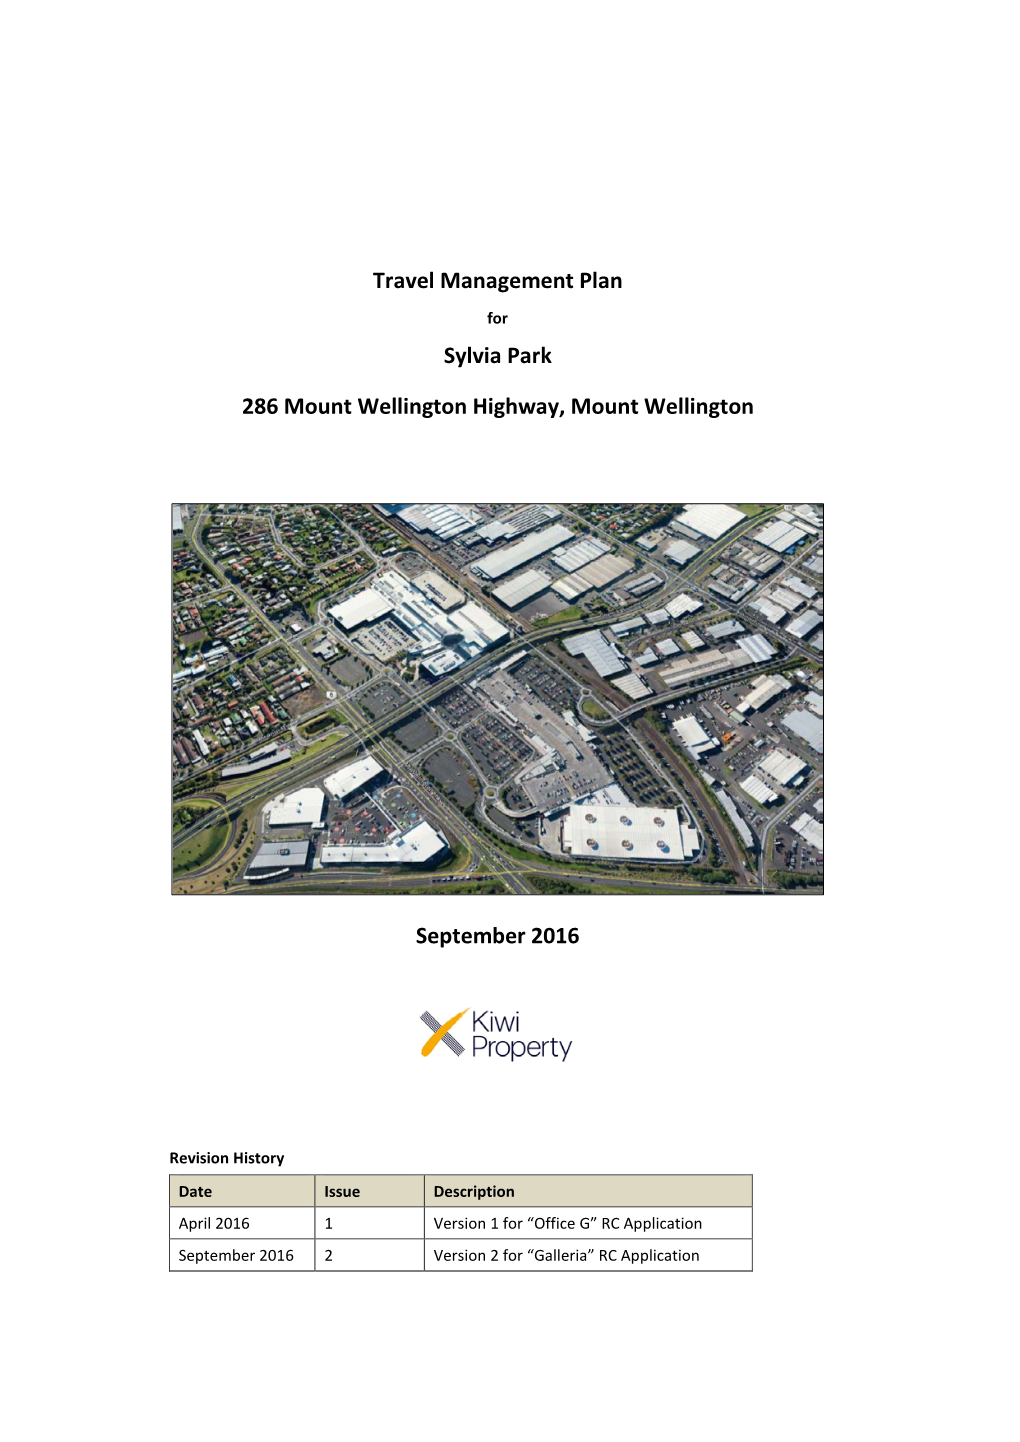 Travel Management Plan Sylvia Park 286 Mount Wellington